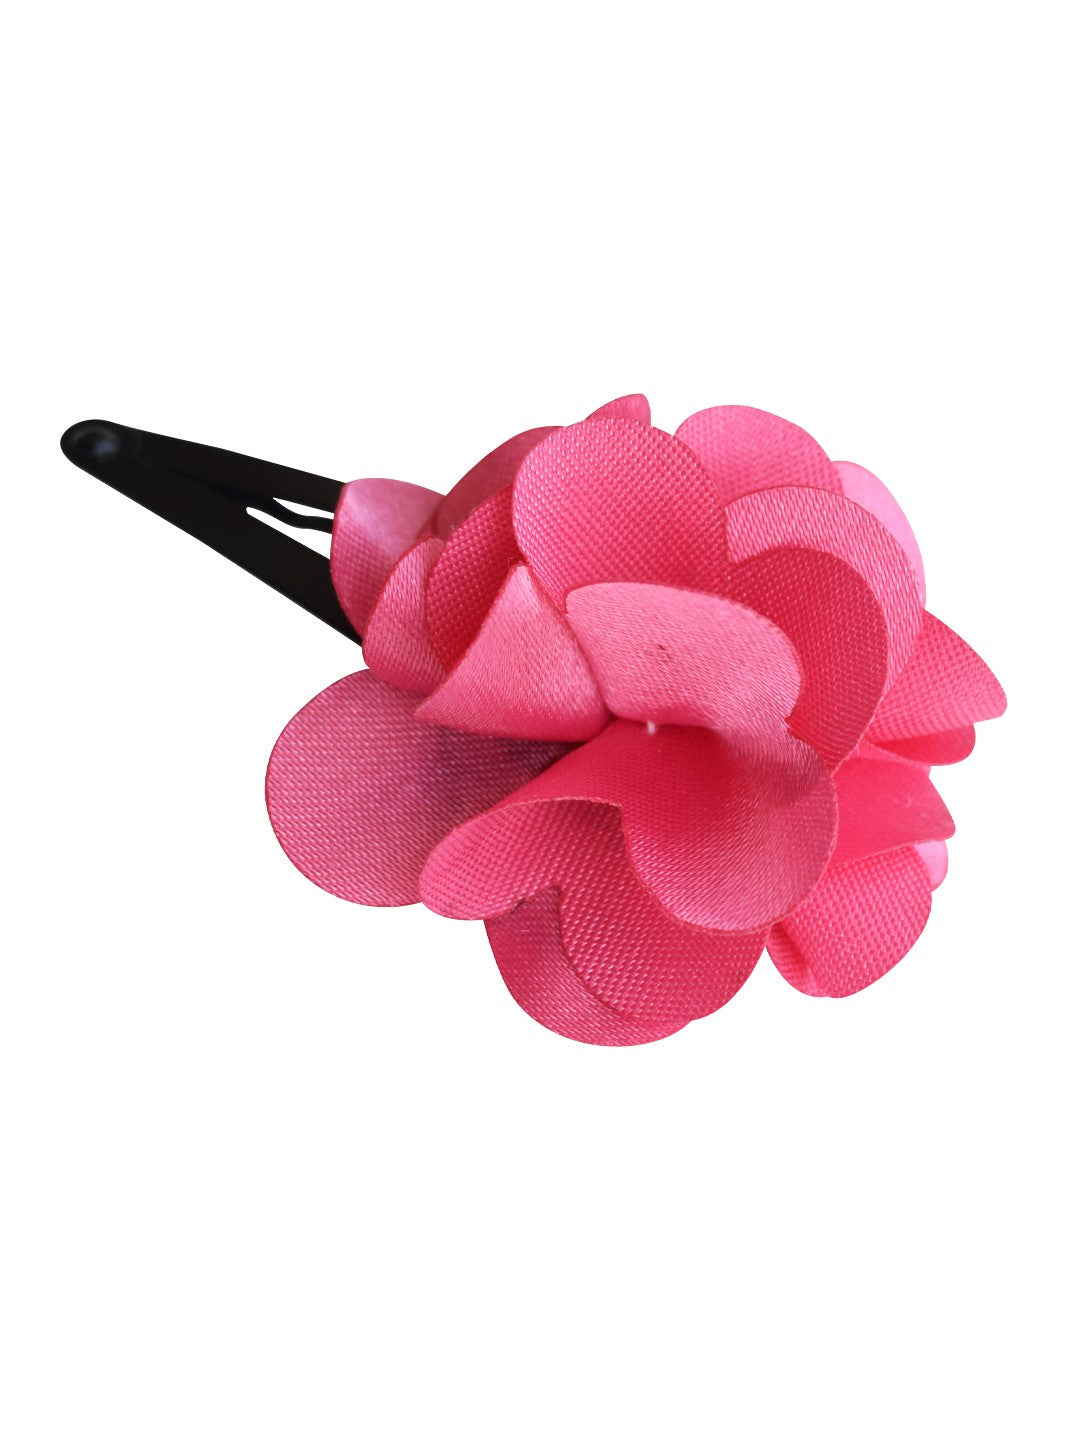 Onion Pink flower clip